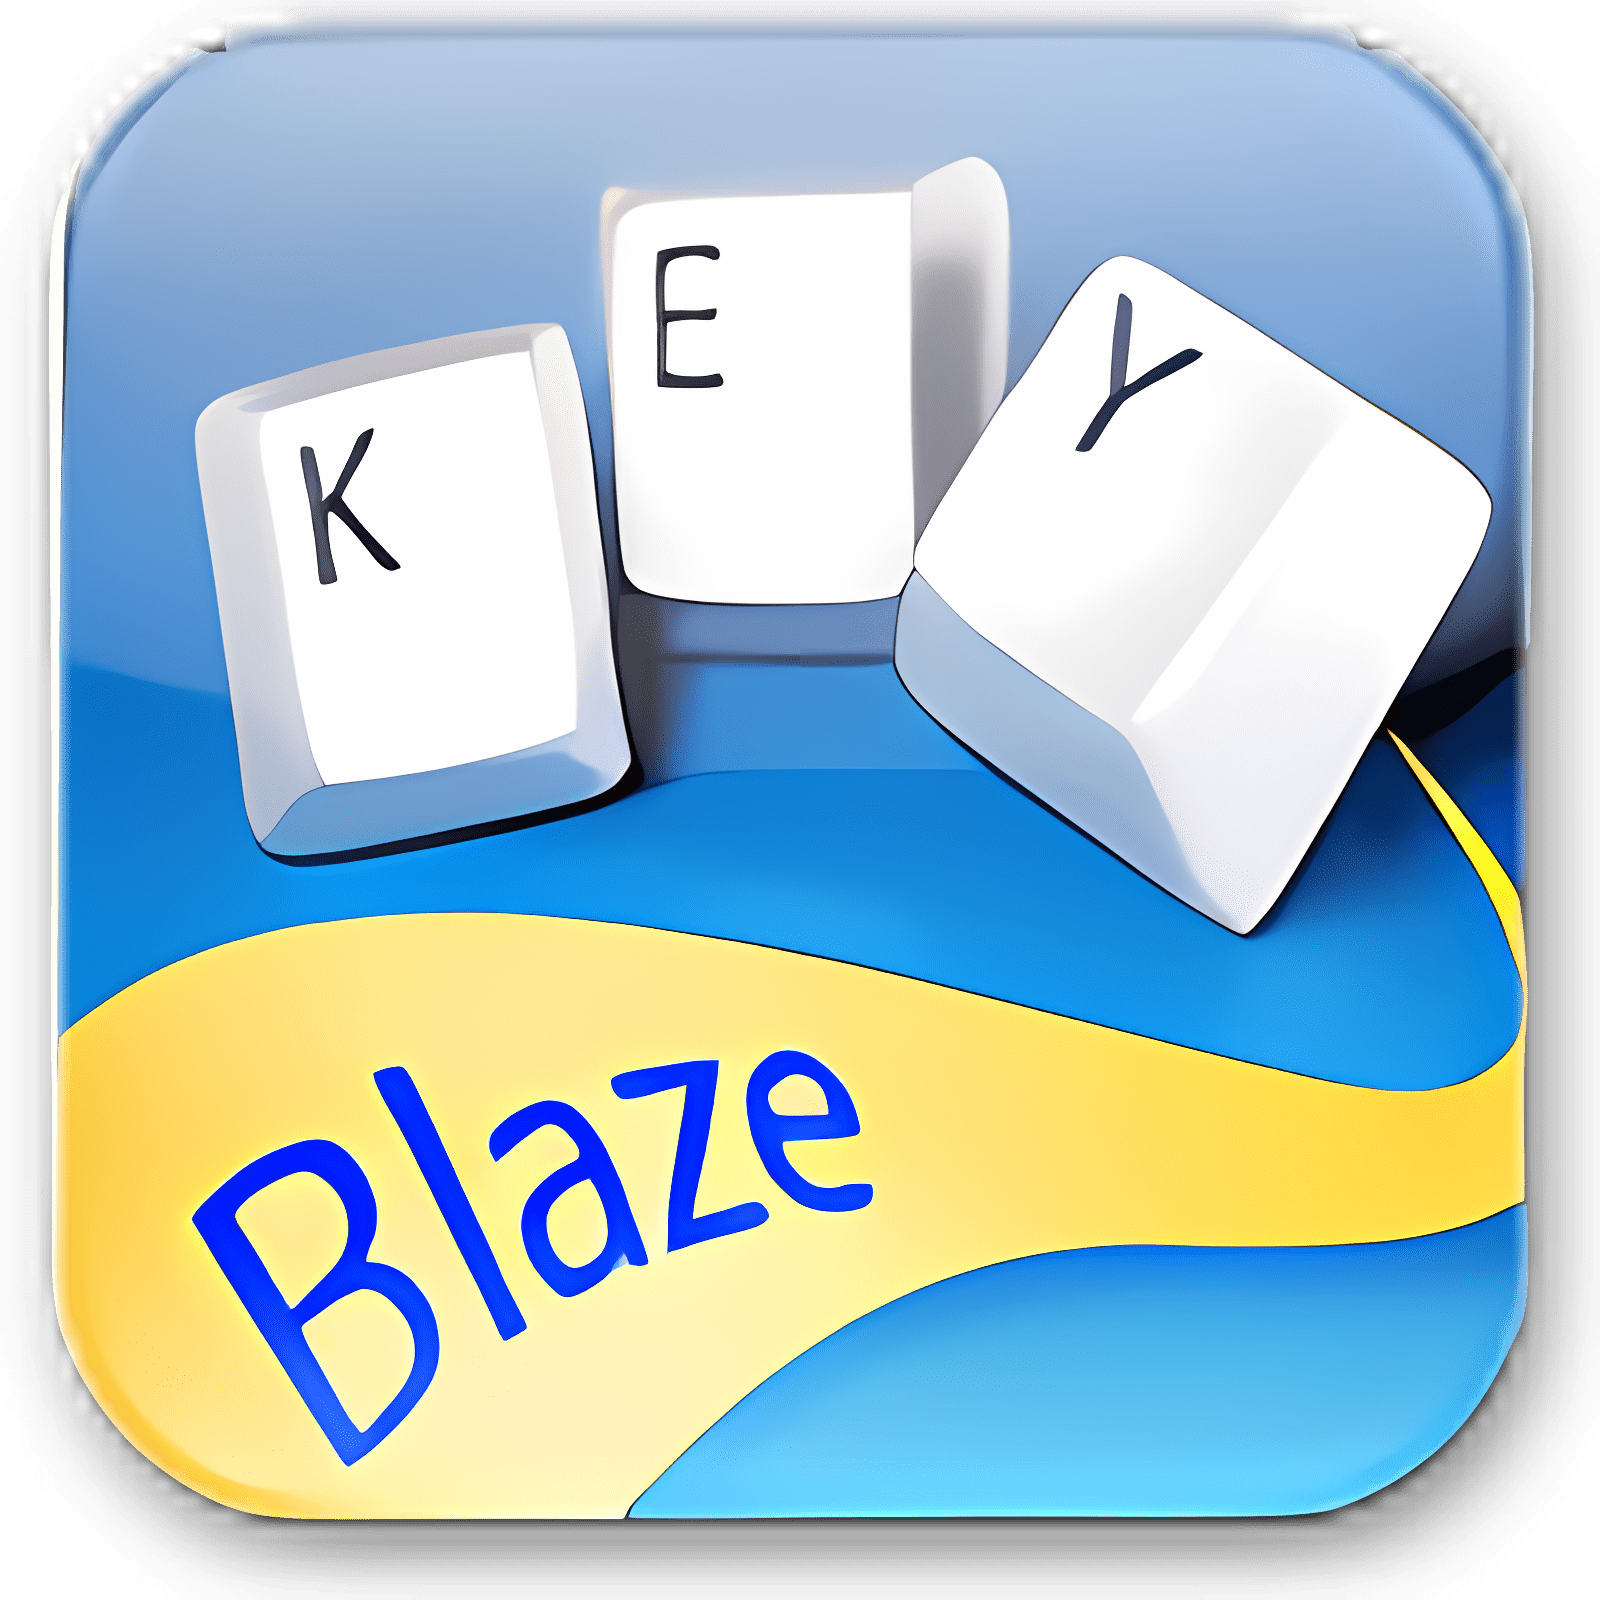 keyblaze download